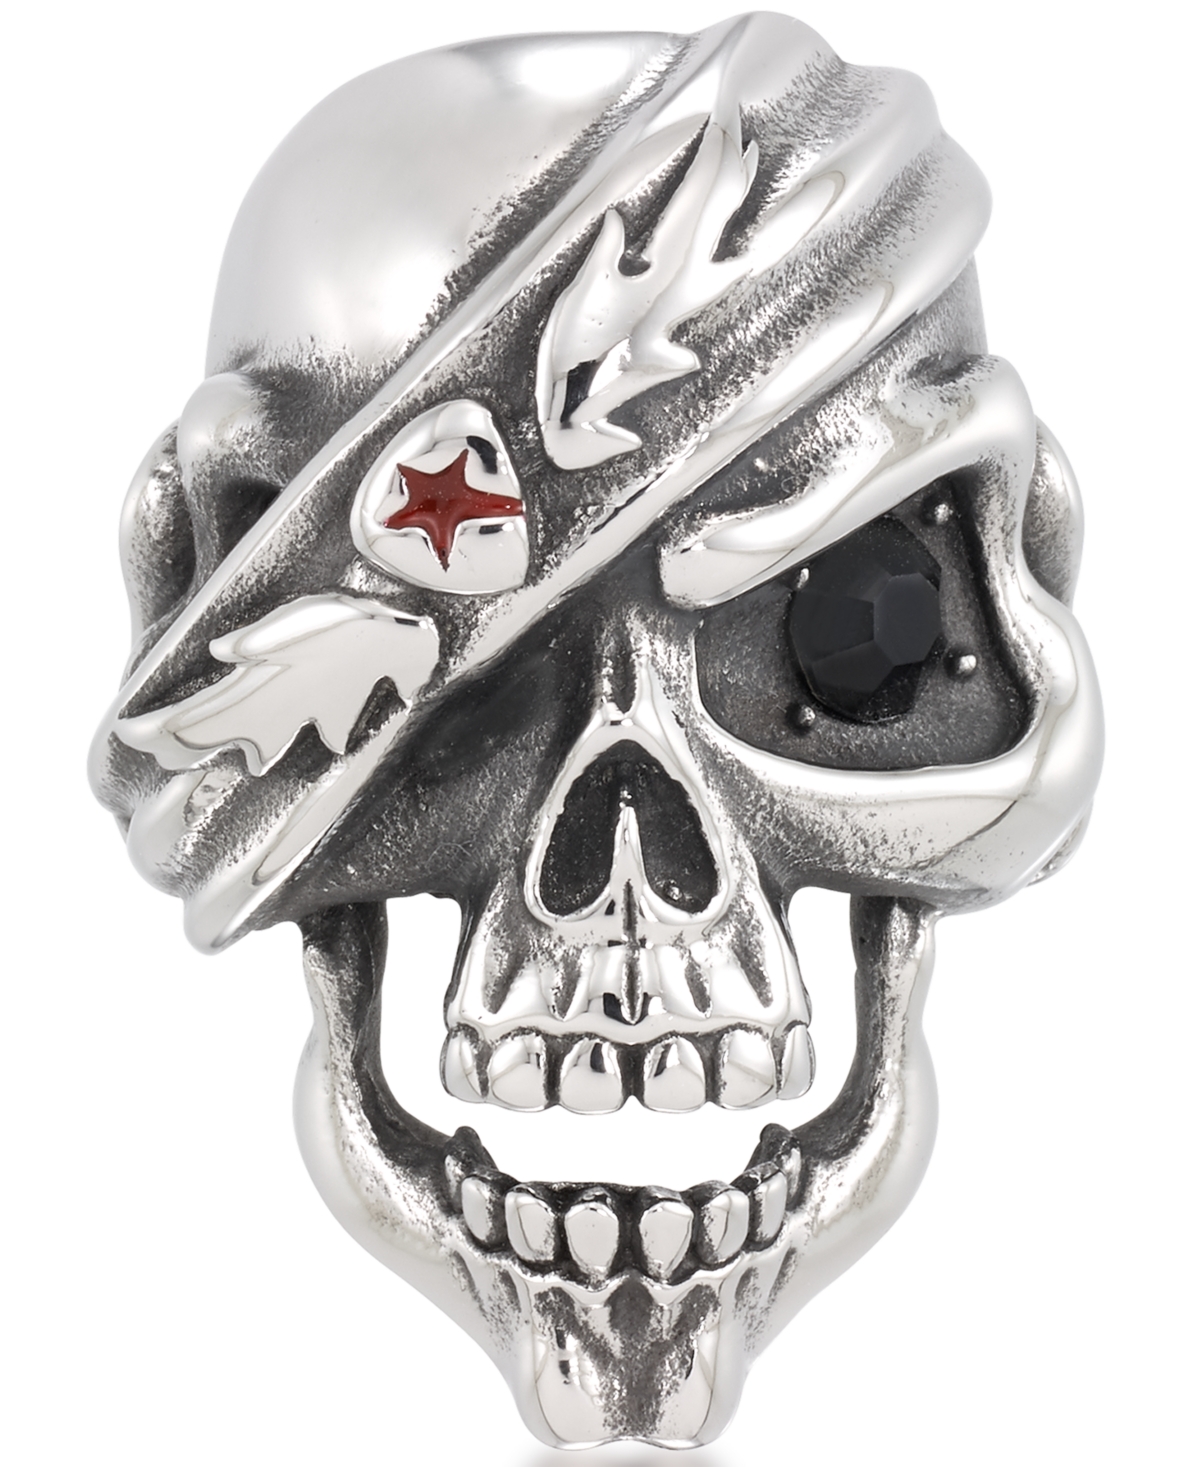 Men's Black Cubic Zirconia & Red Enamel Pirate Skull Ring in Stainless Steel - Stainless Steel